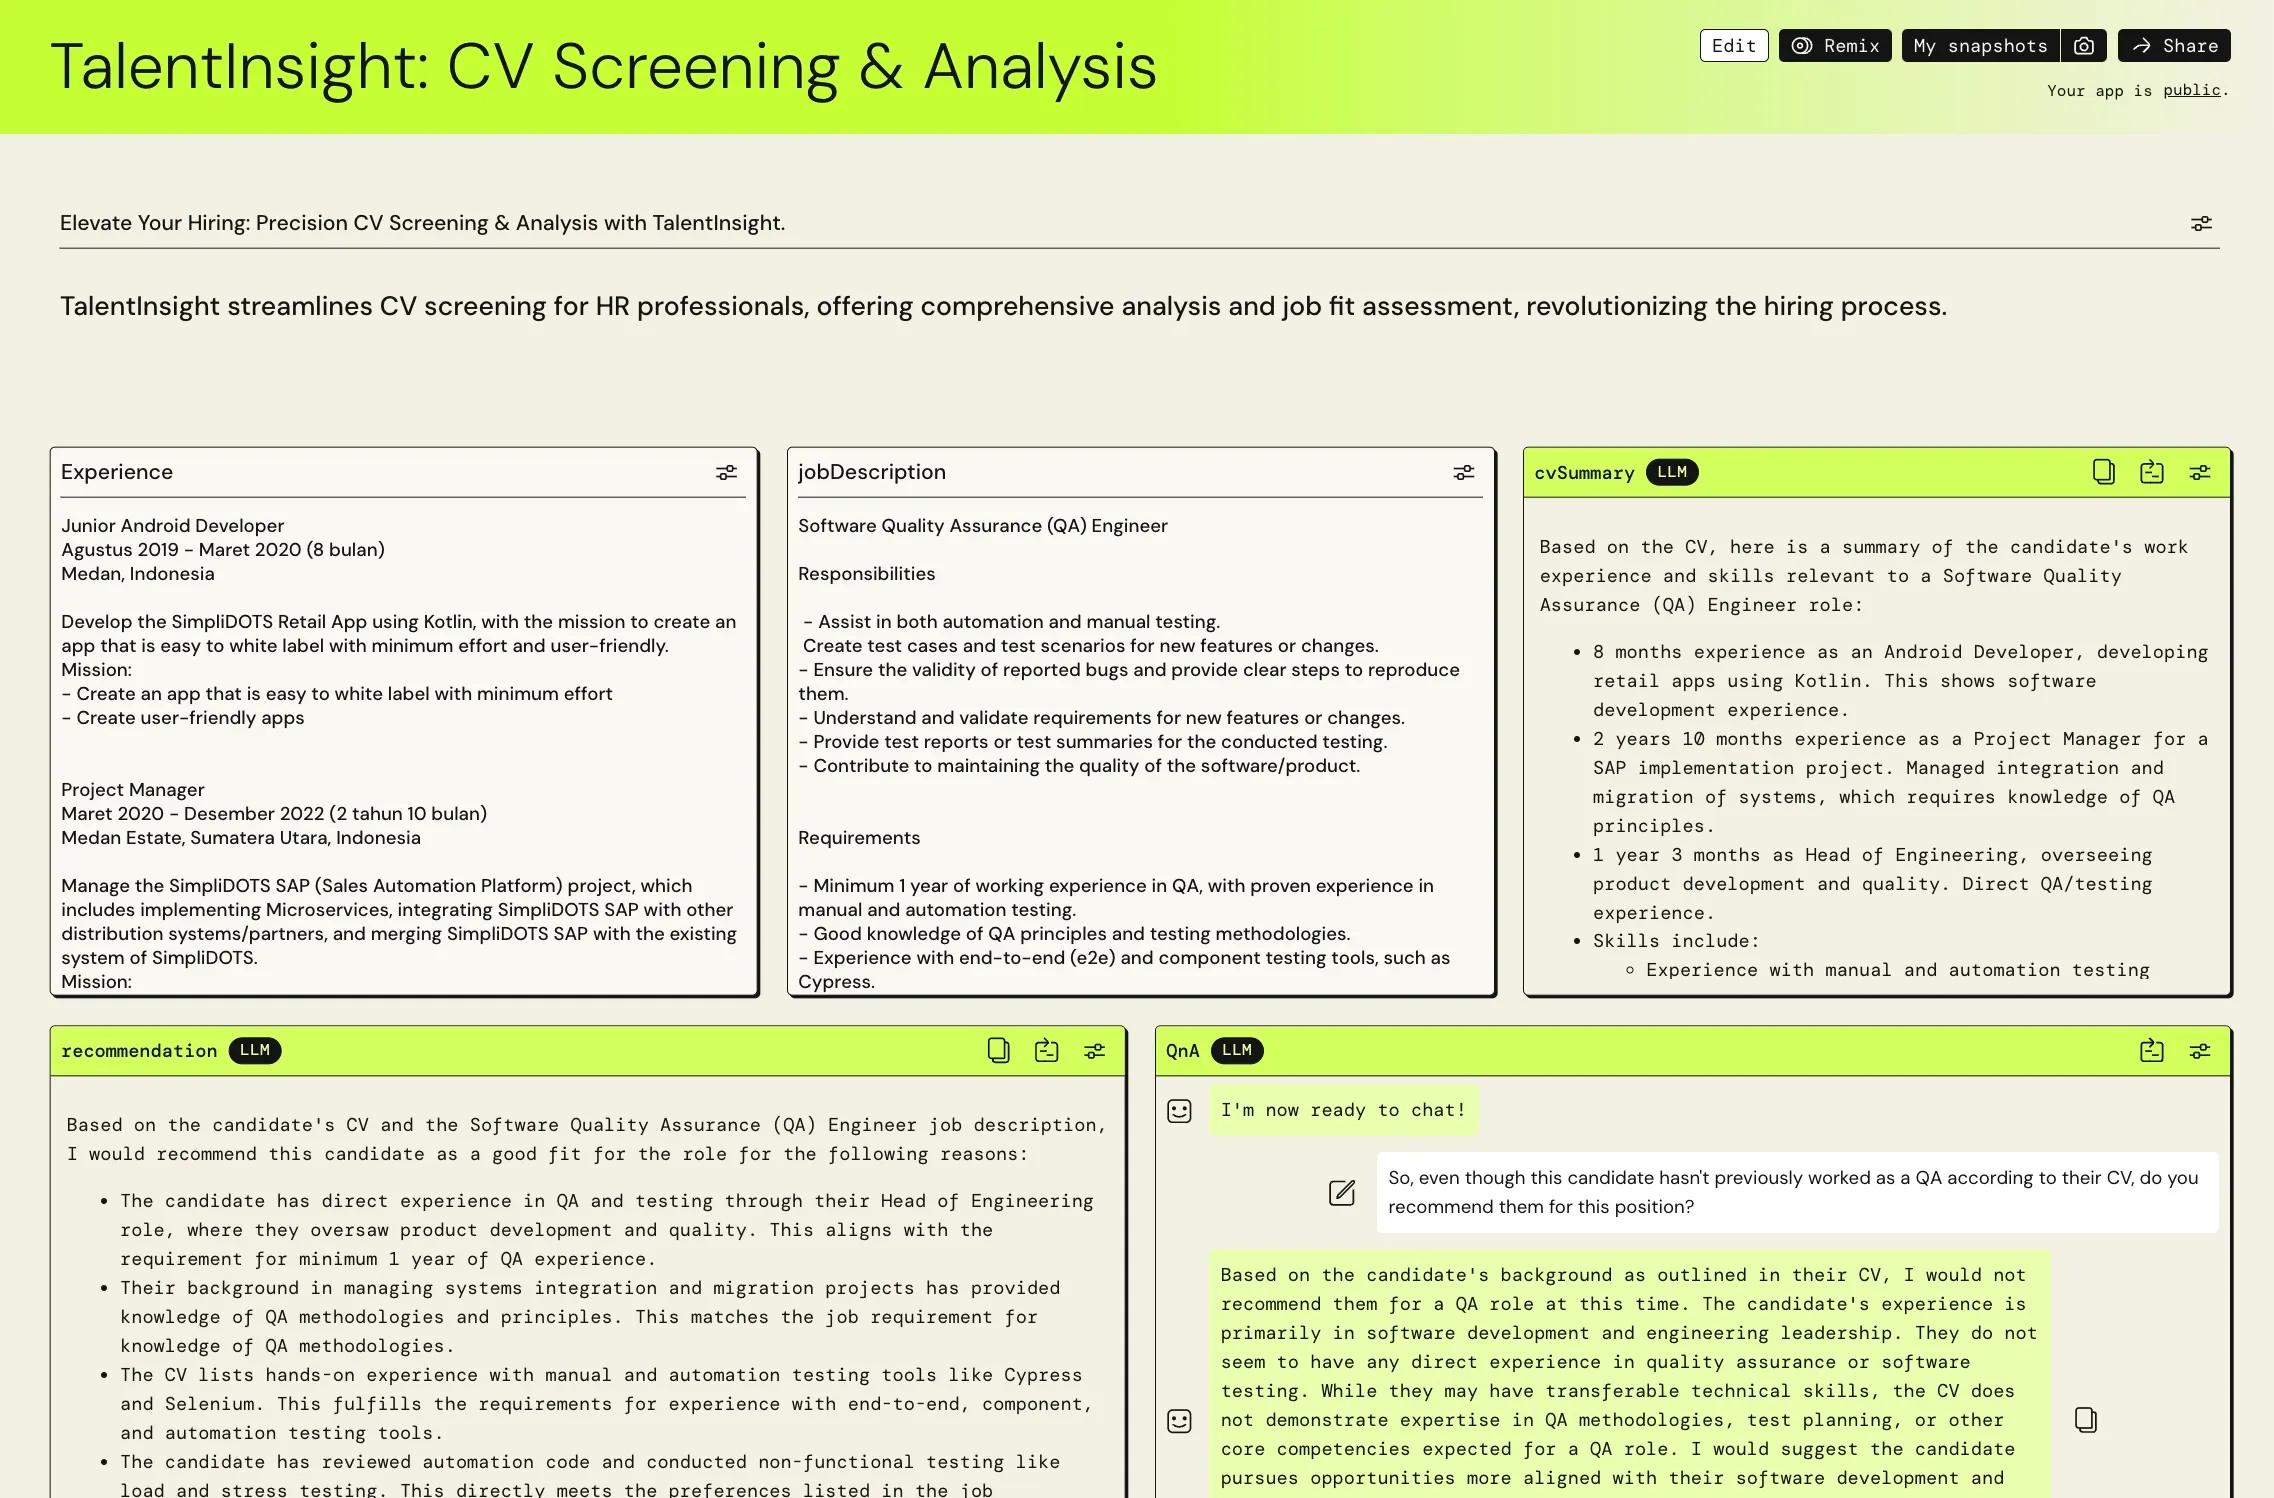 TalentInsight: CV Screening & Analysis with AWS PartyRock